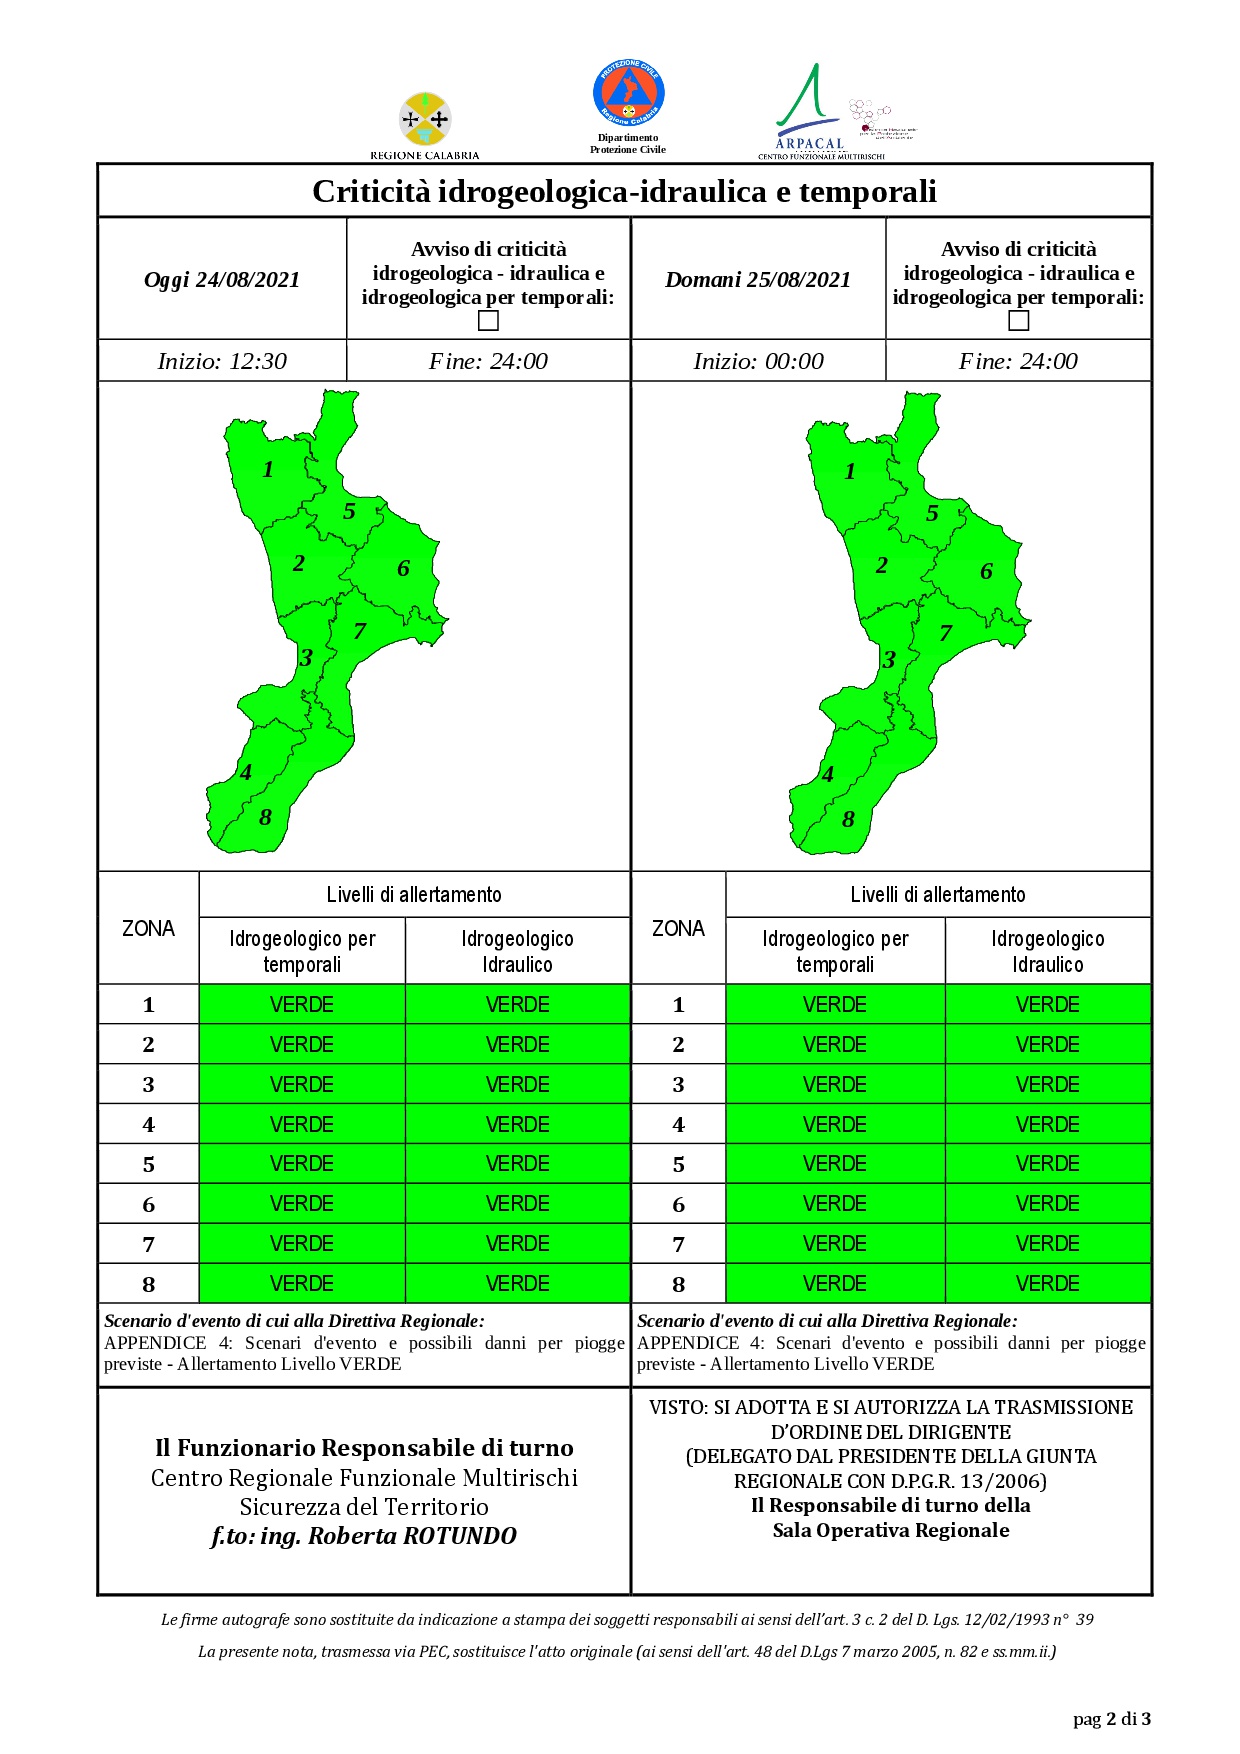 Criticità idrogeologica-idraulica e temporali in Calabria 24-08-2021